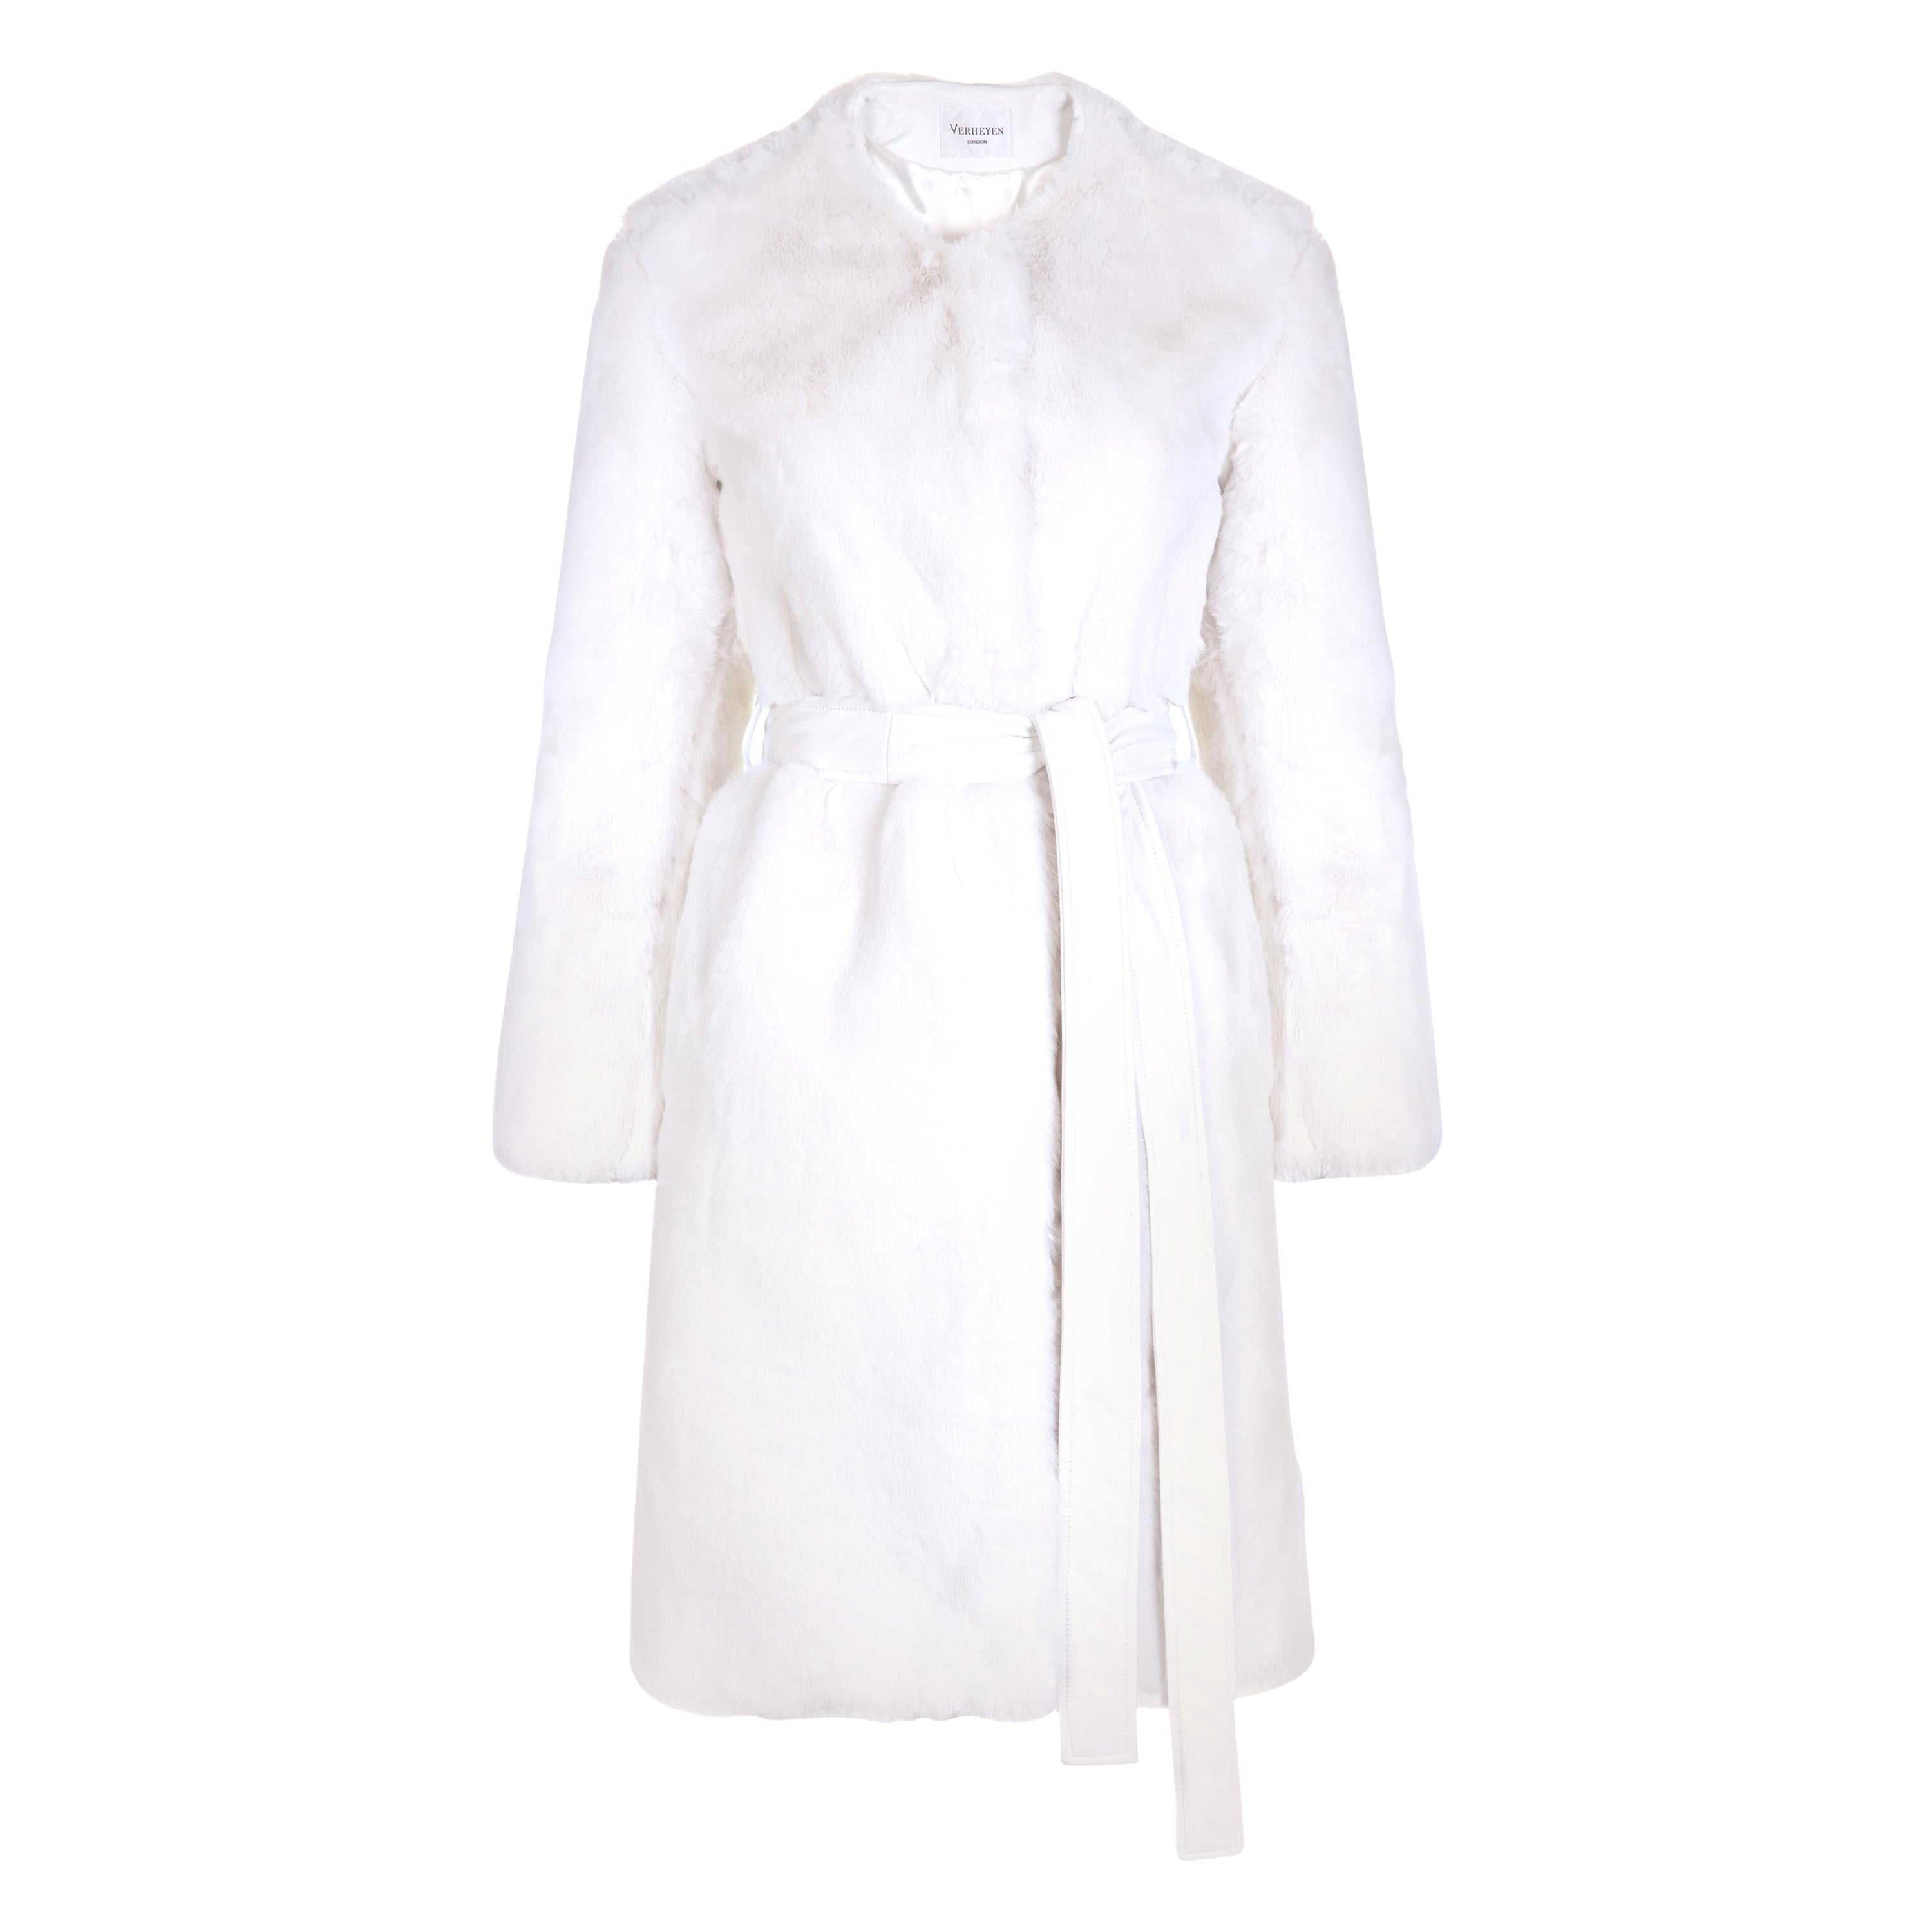 Verheyen London Serena  Collarless Faux Fur Coat in White - Size uk 14 For Sale